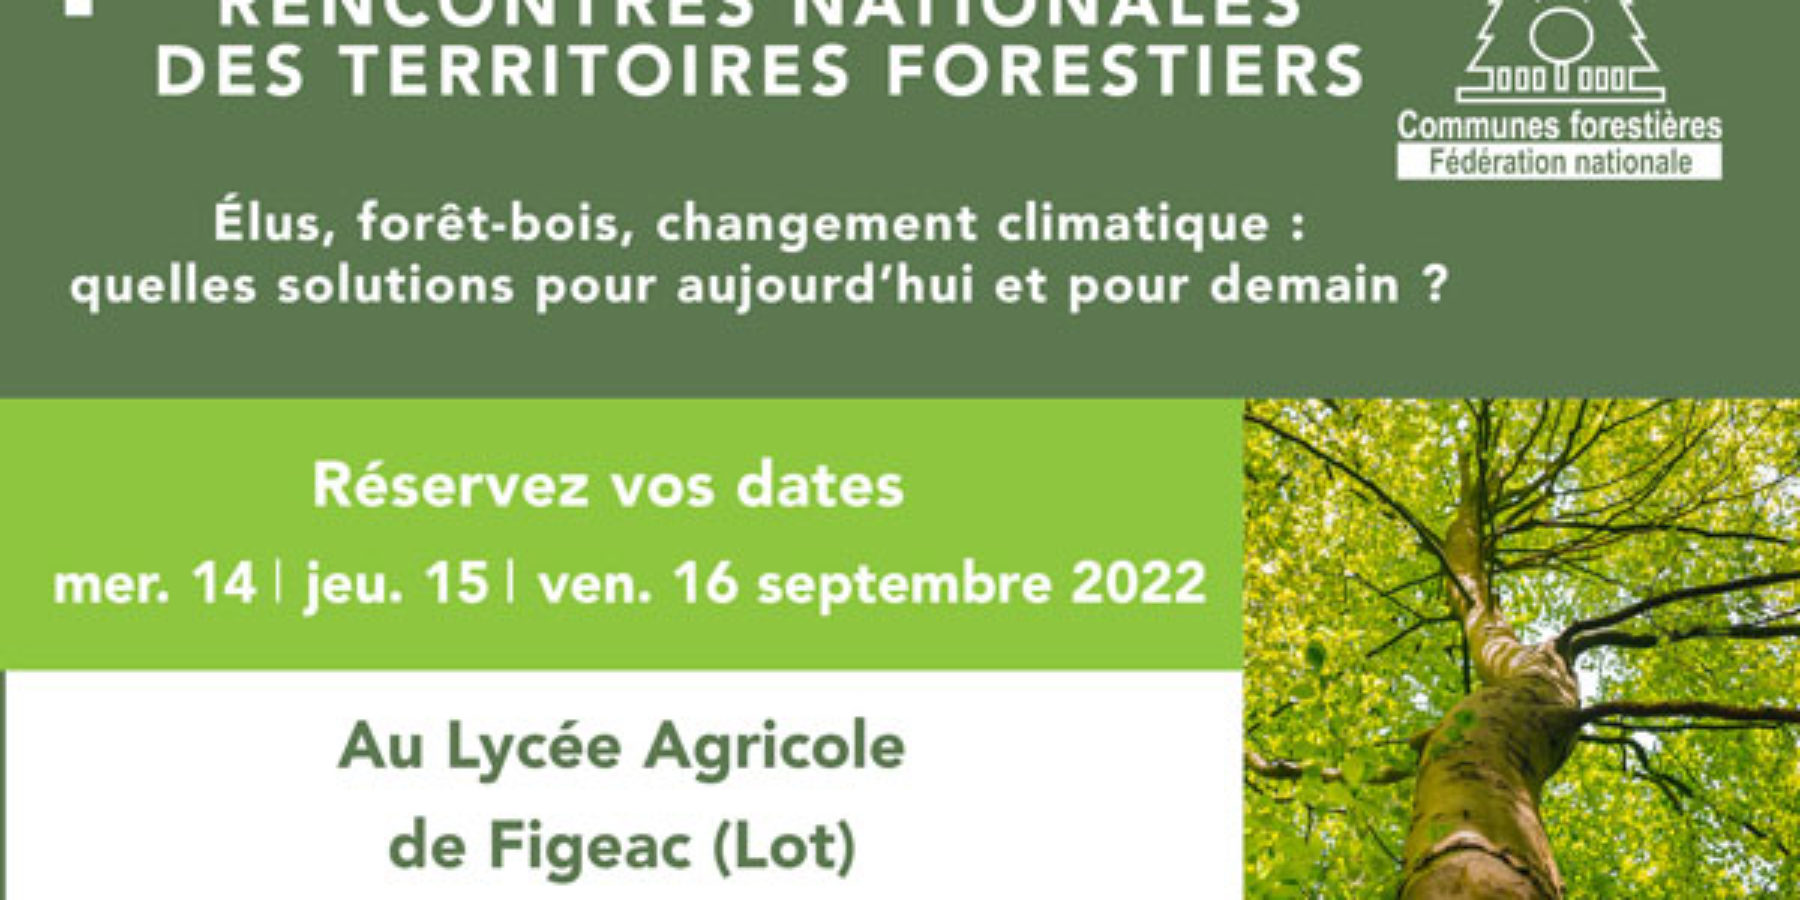 SAVE THE DATE - Les rencontres nationales des territoires forestiers se ...